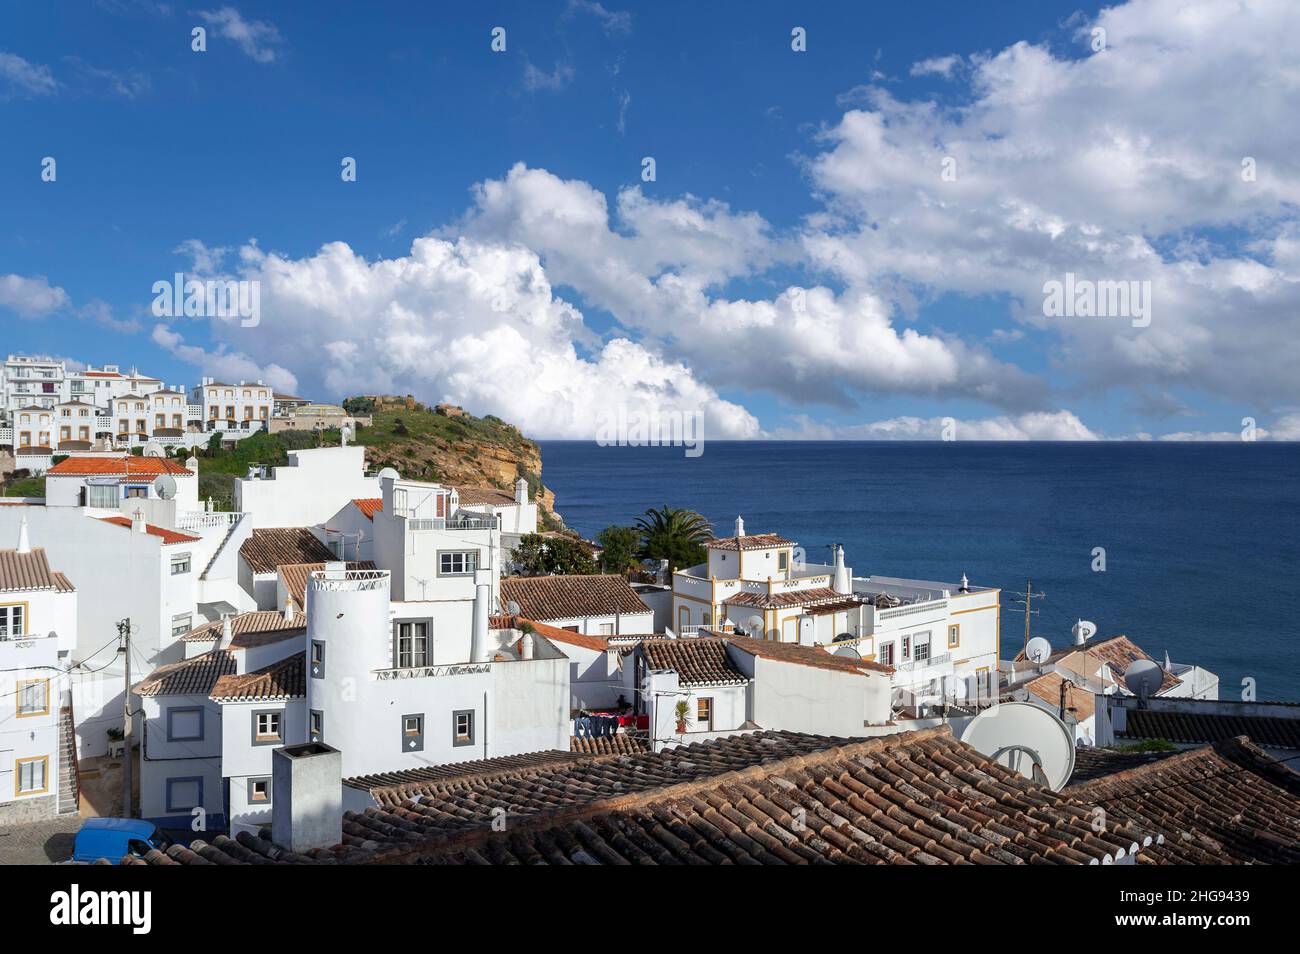 Village view with coastal landscape, Burgau, Algarve, Portugal, Europe Stock Photo